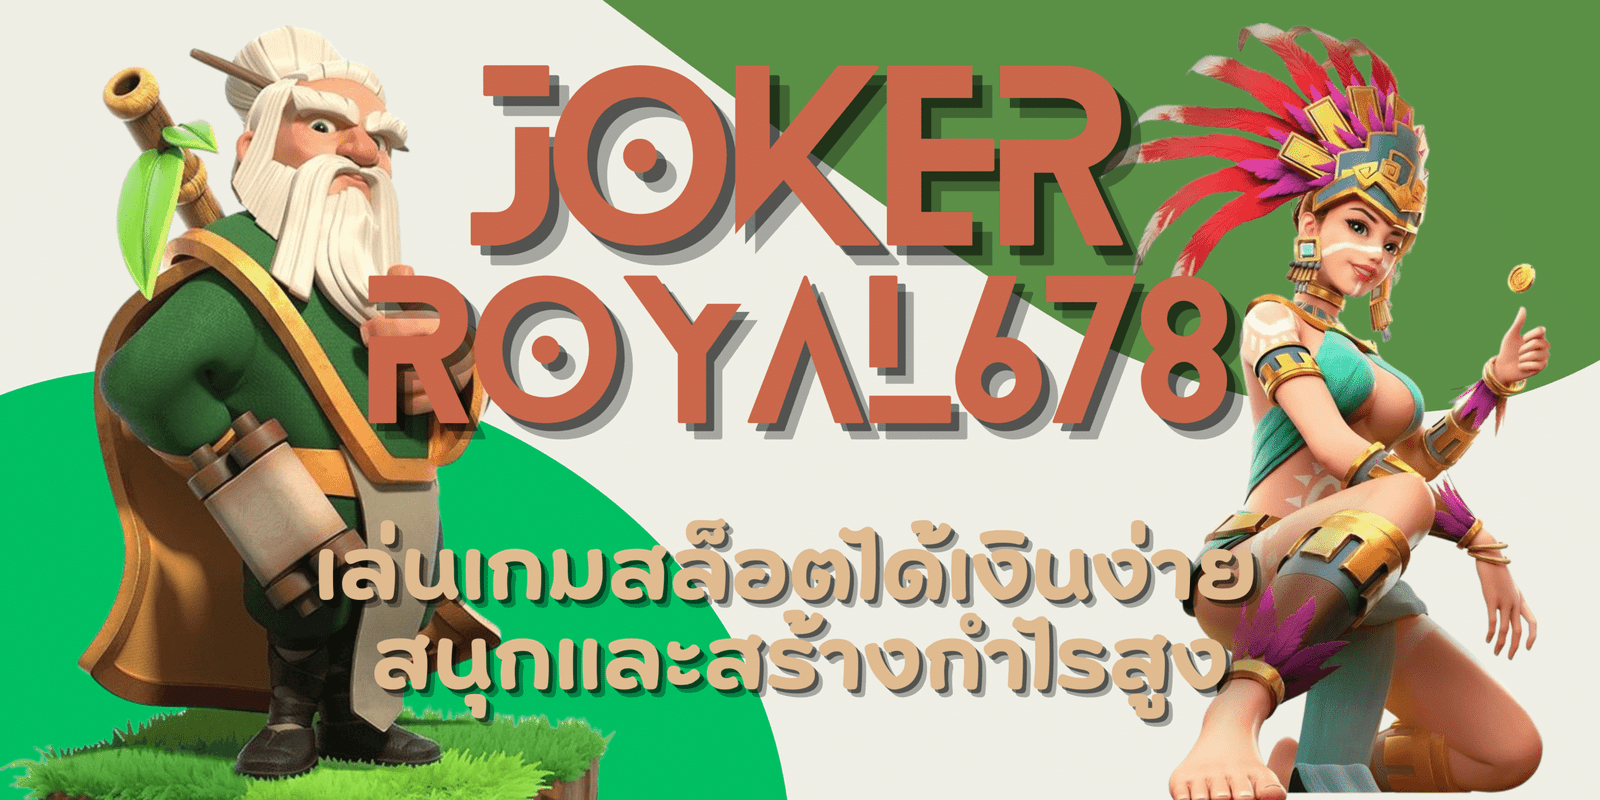 joker-royal678-สร้างกำไรสูง